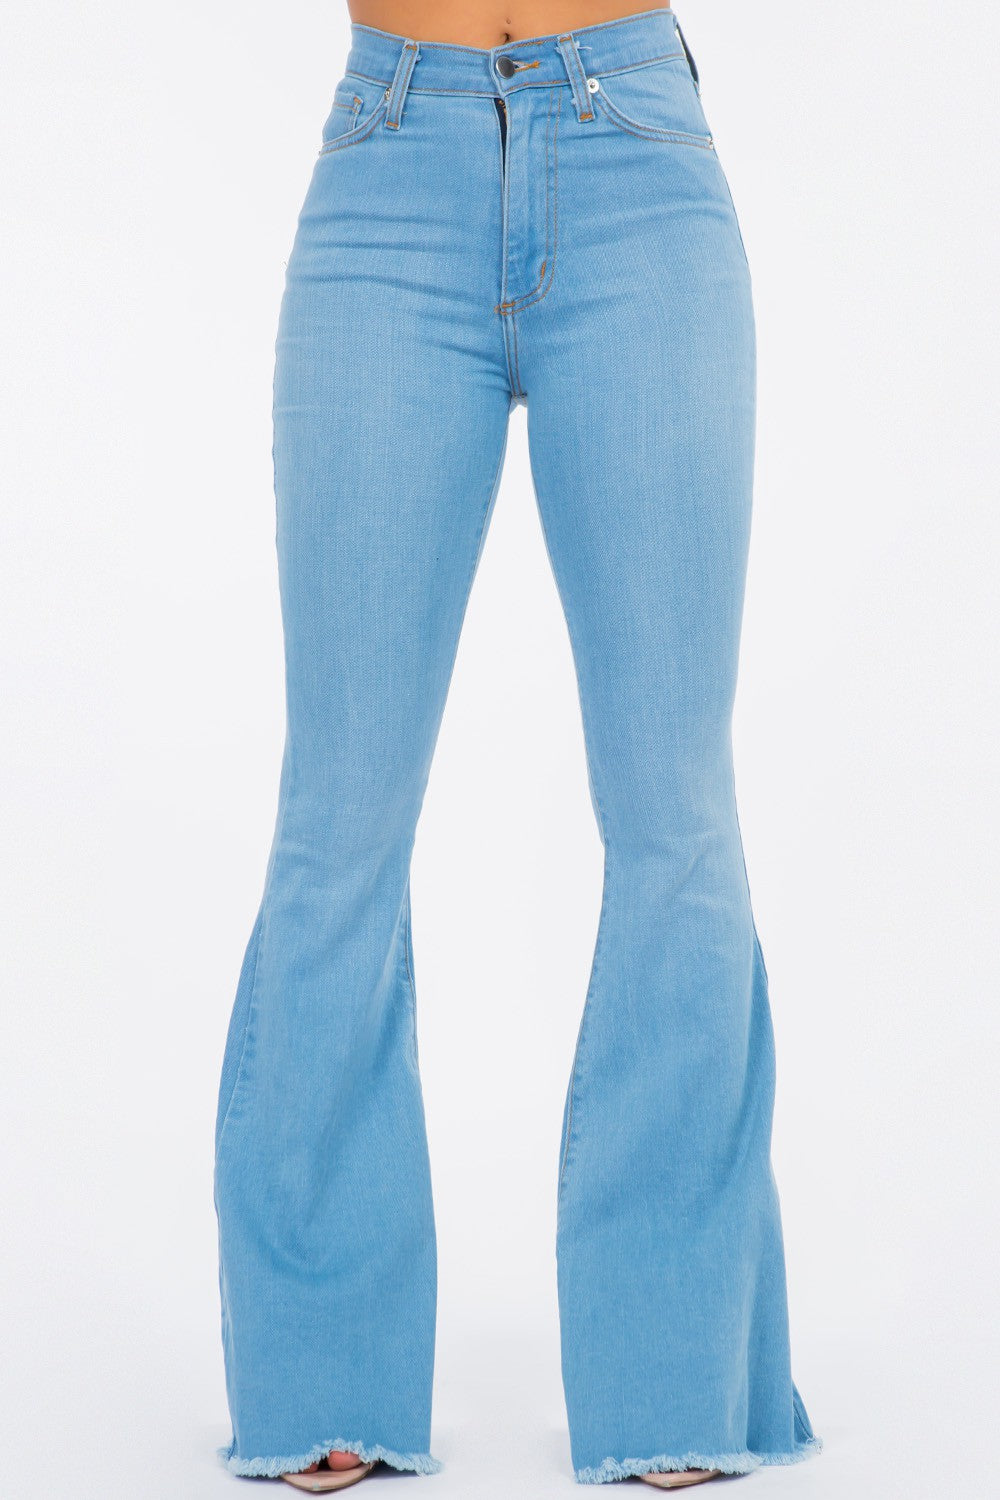 Fringe Bell Bottom Jean in Light Denim 34 inseam Made in America